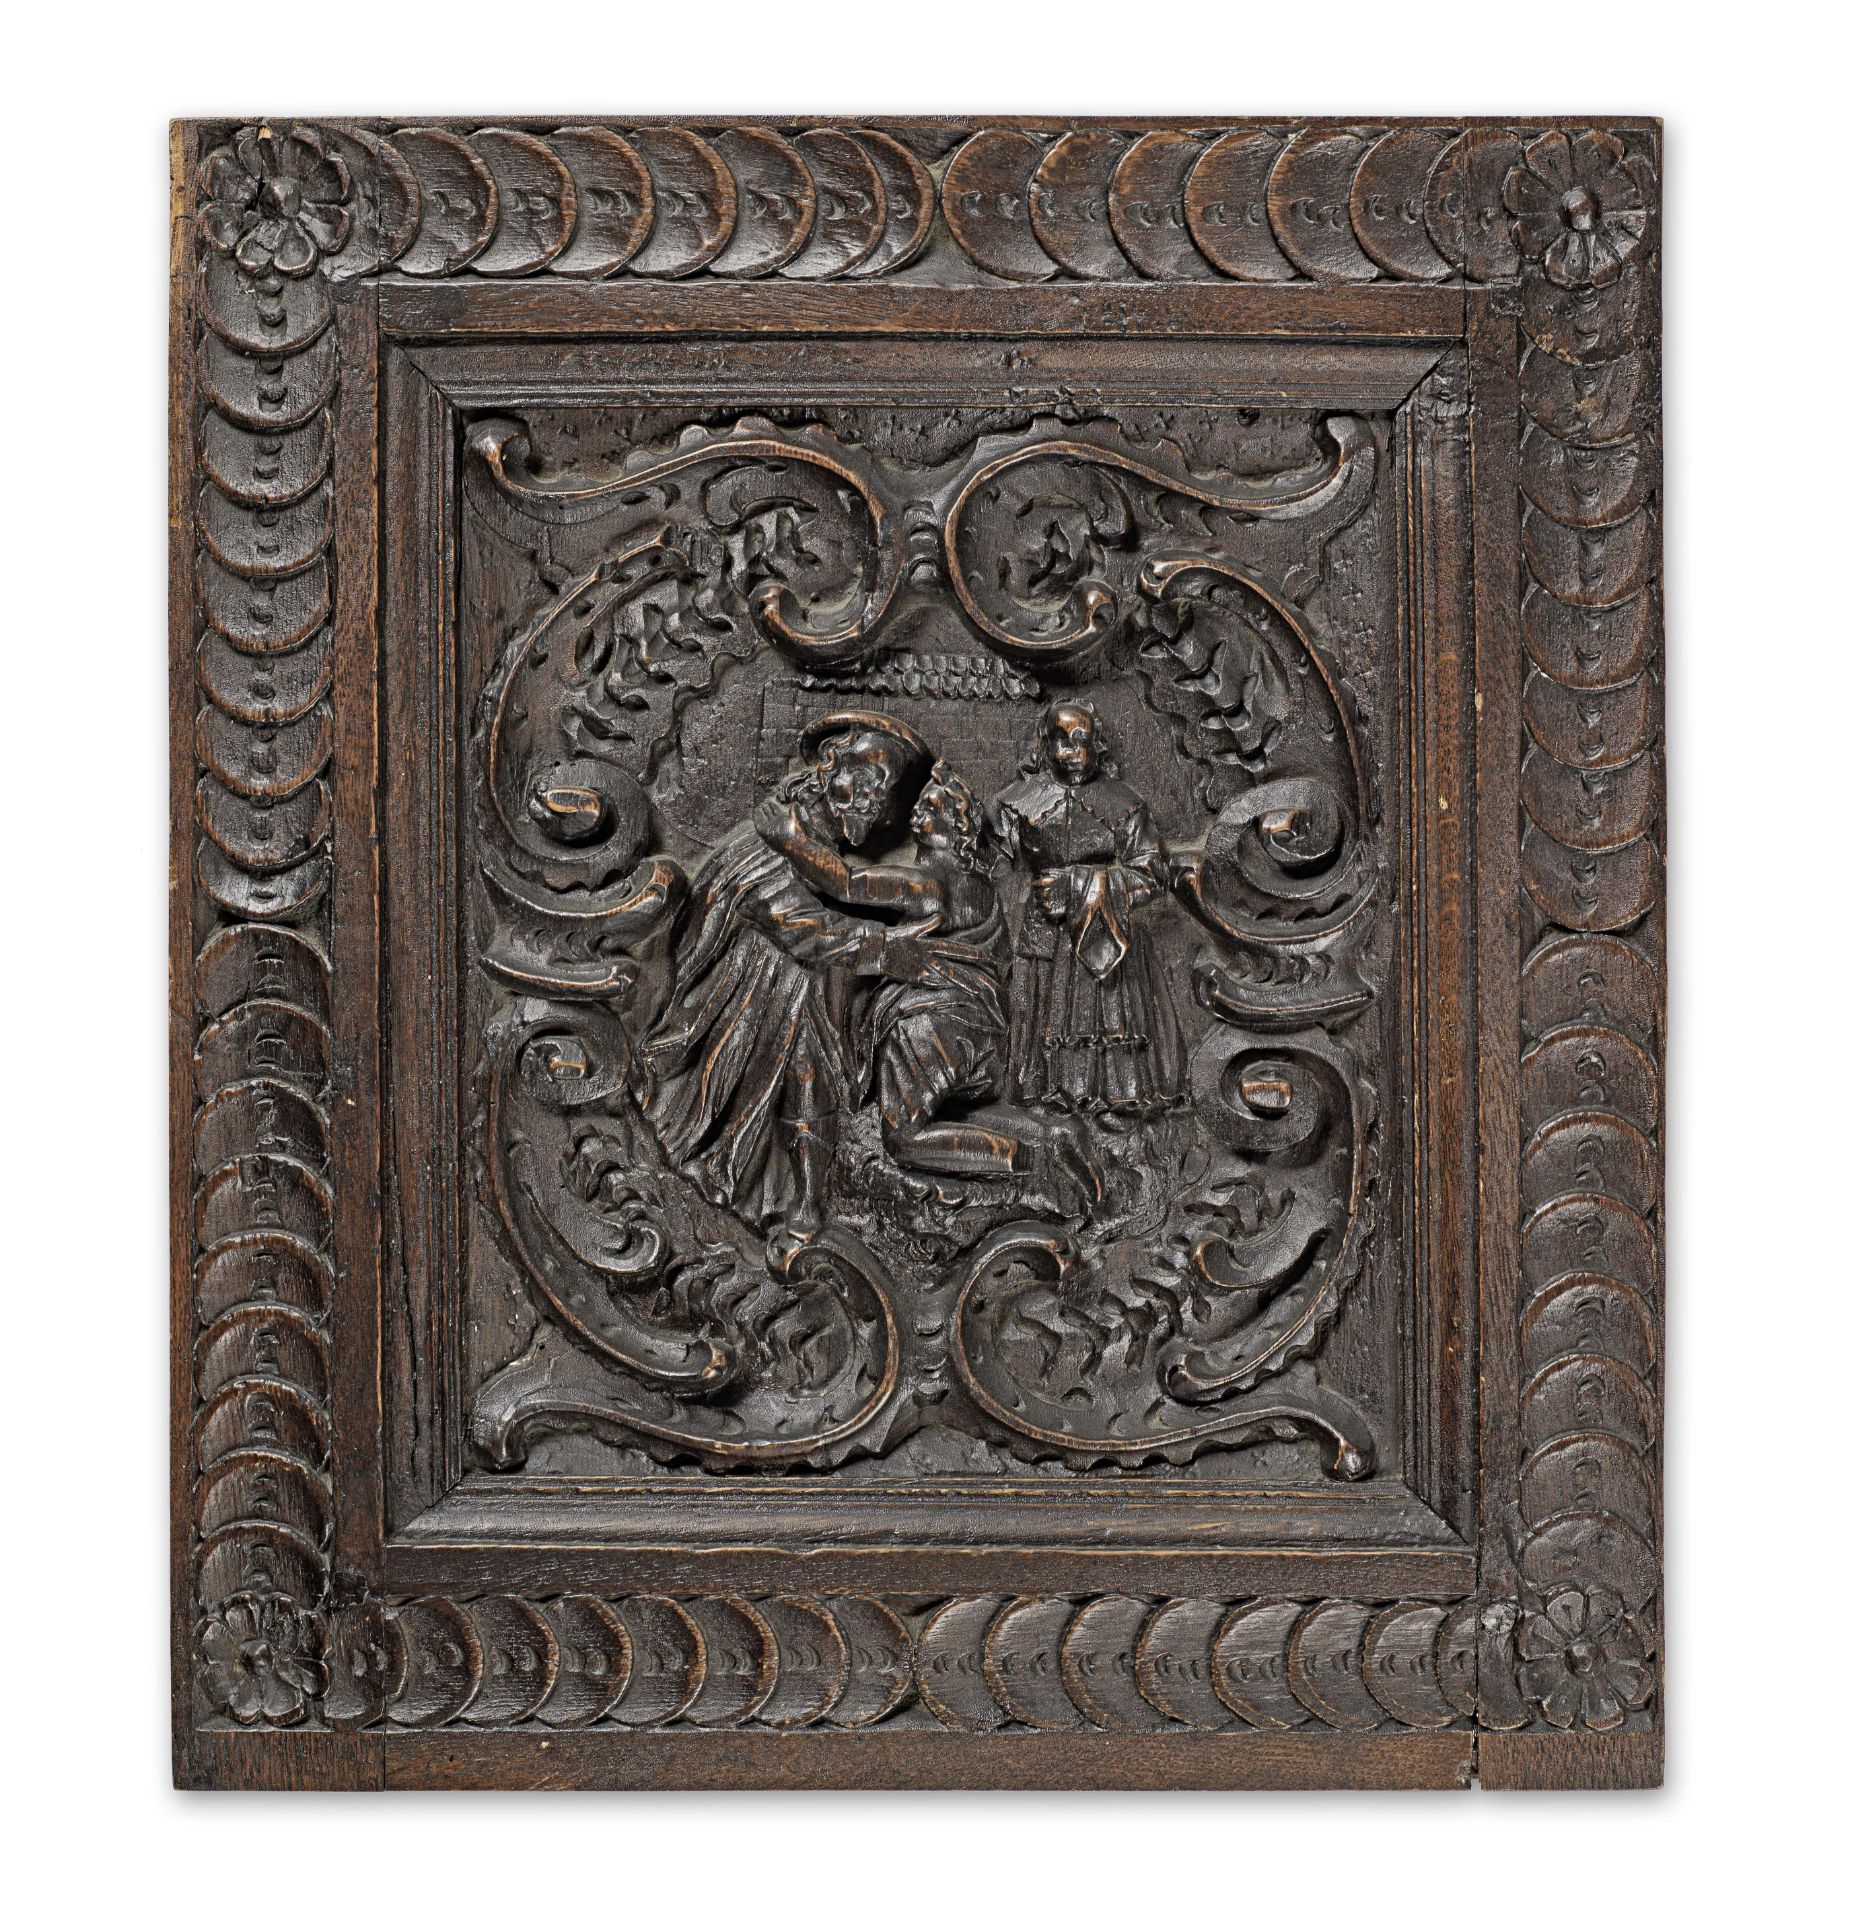 A 17th century carved oak panel, Flemish/Dutch